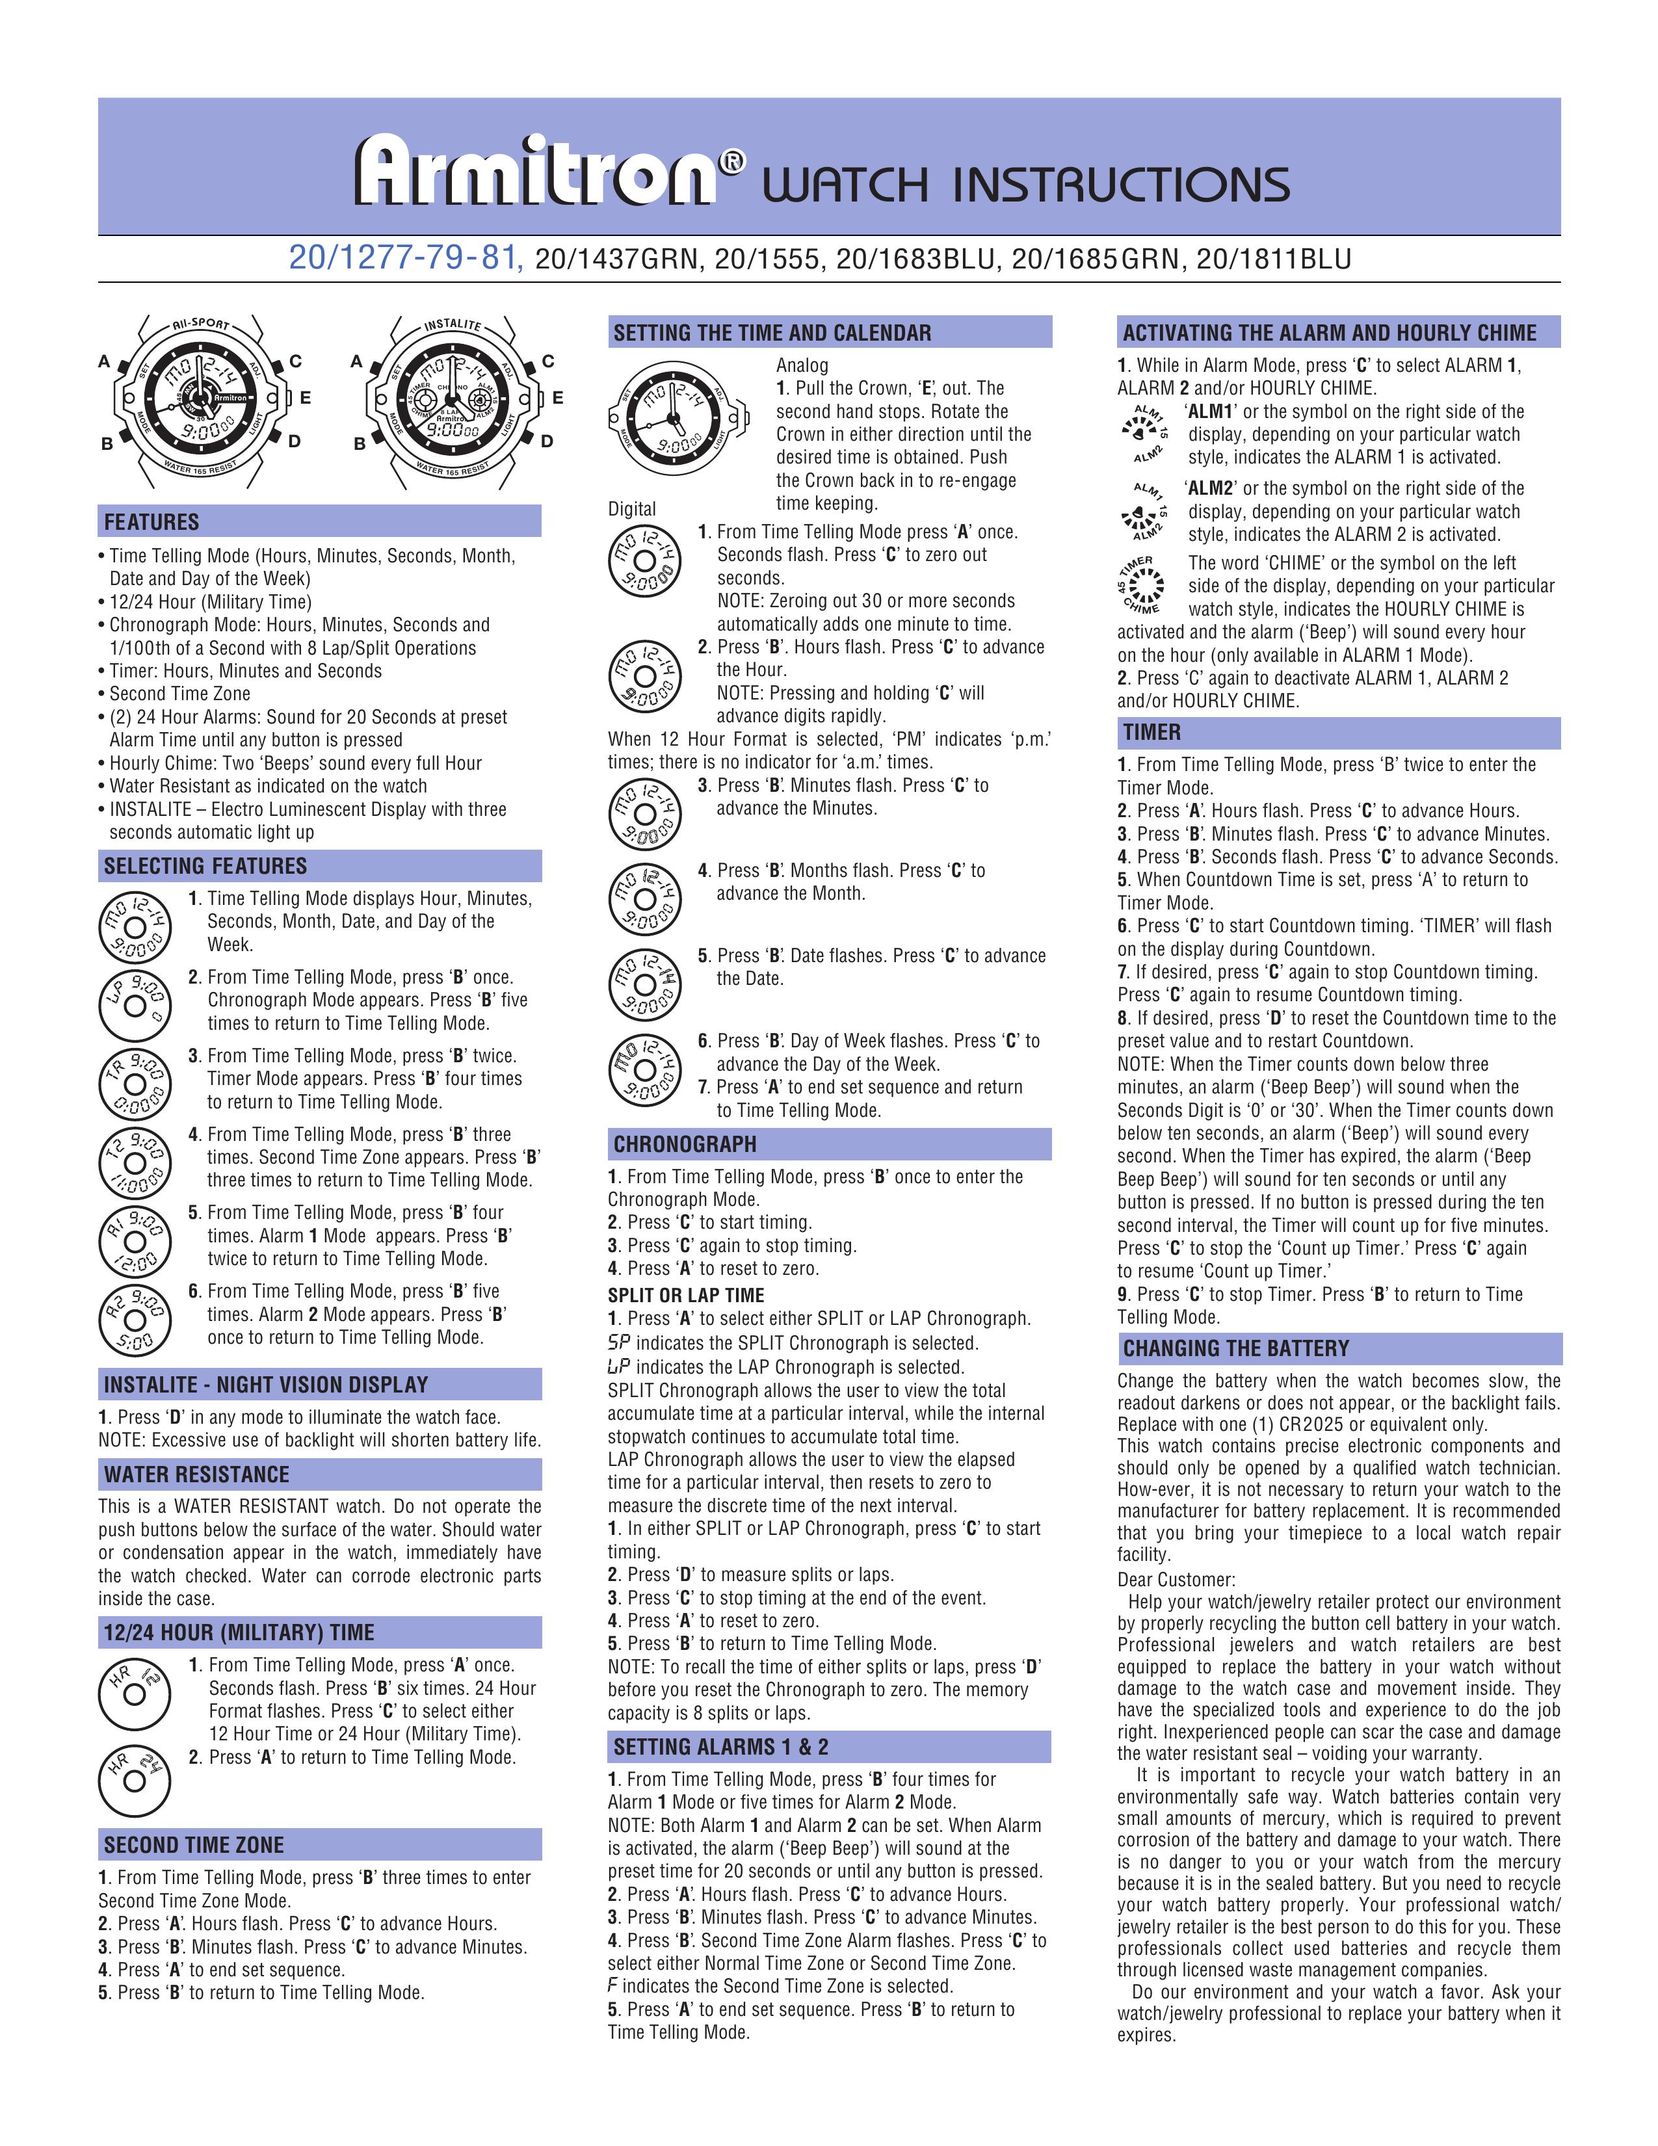 Armitron 20/1683BLU Watch User Manual